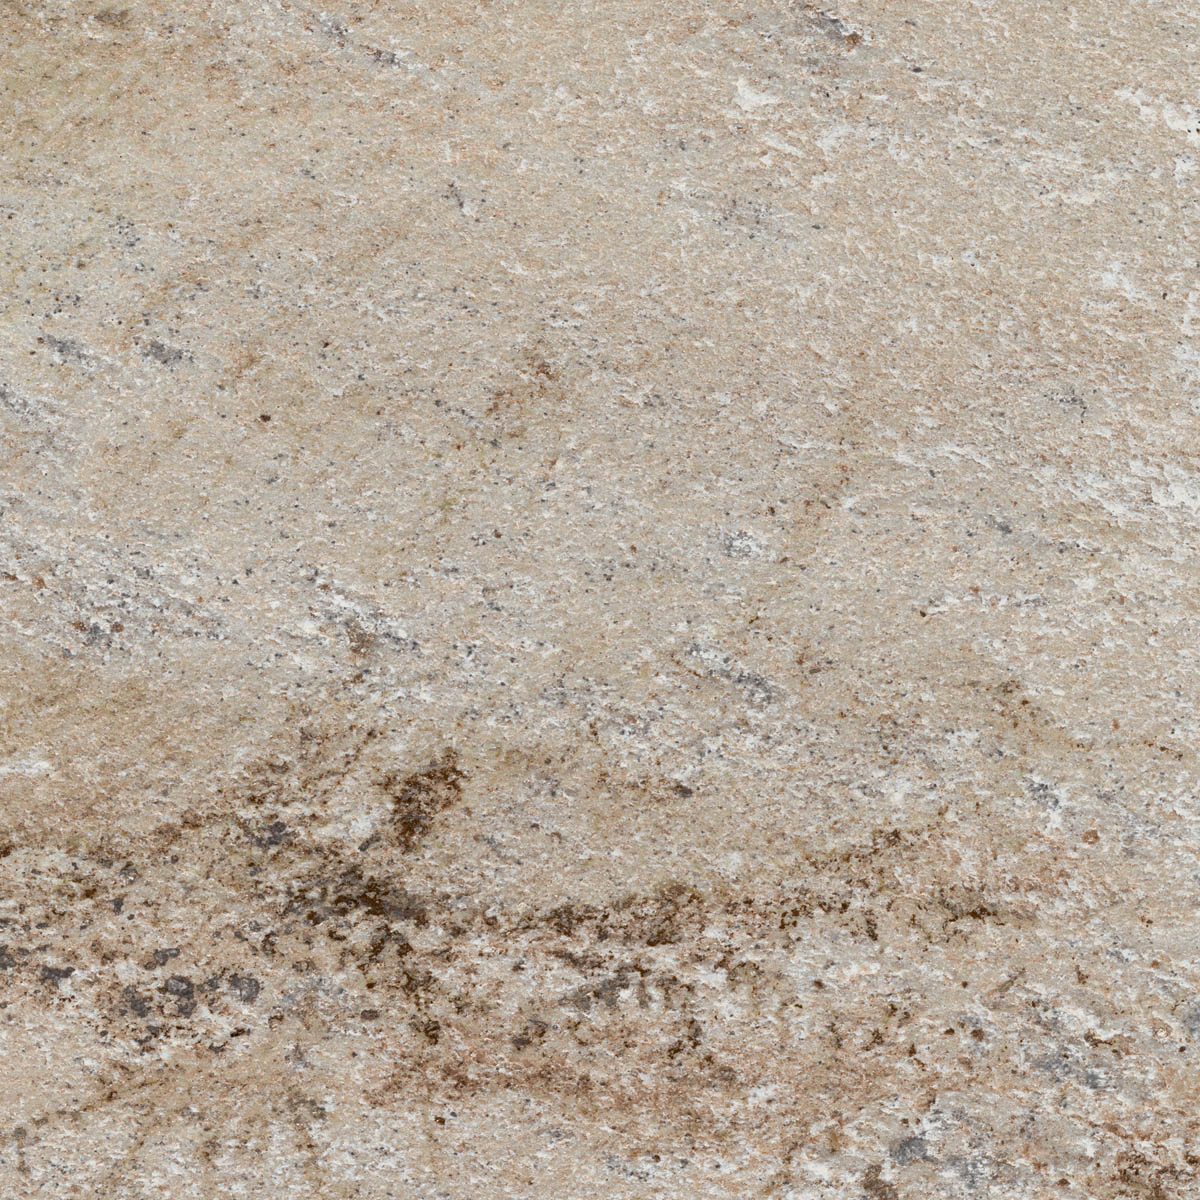 Imola Trail 18 Quarzite Bianco matt natur strukturiert Outdoor 176404 20x20cm 18mm - QUAR BIA18 20